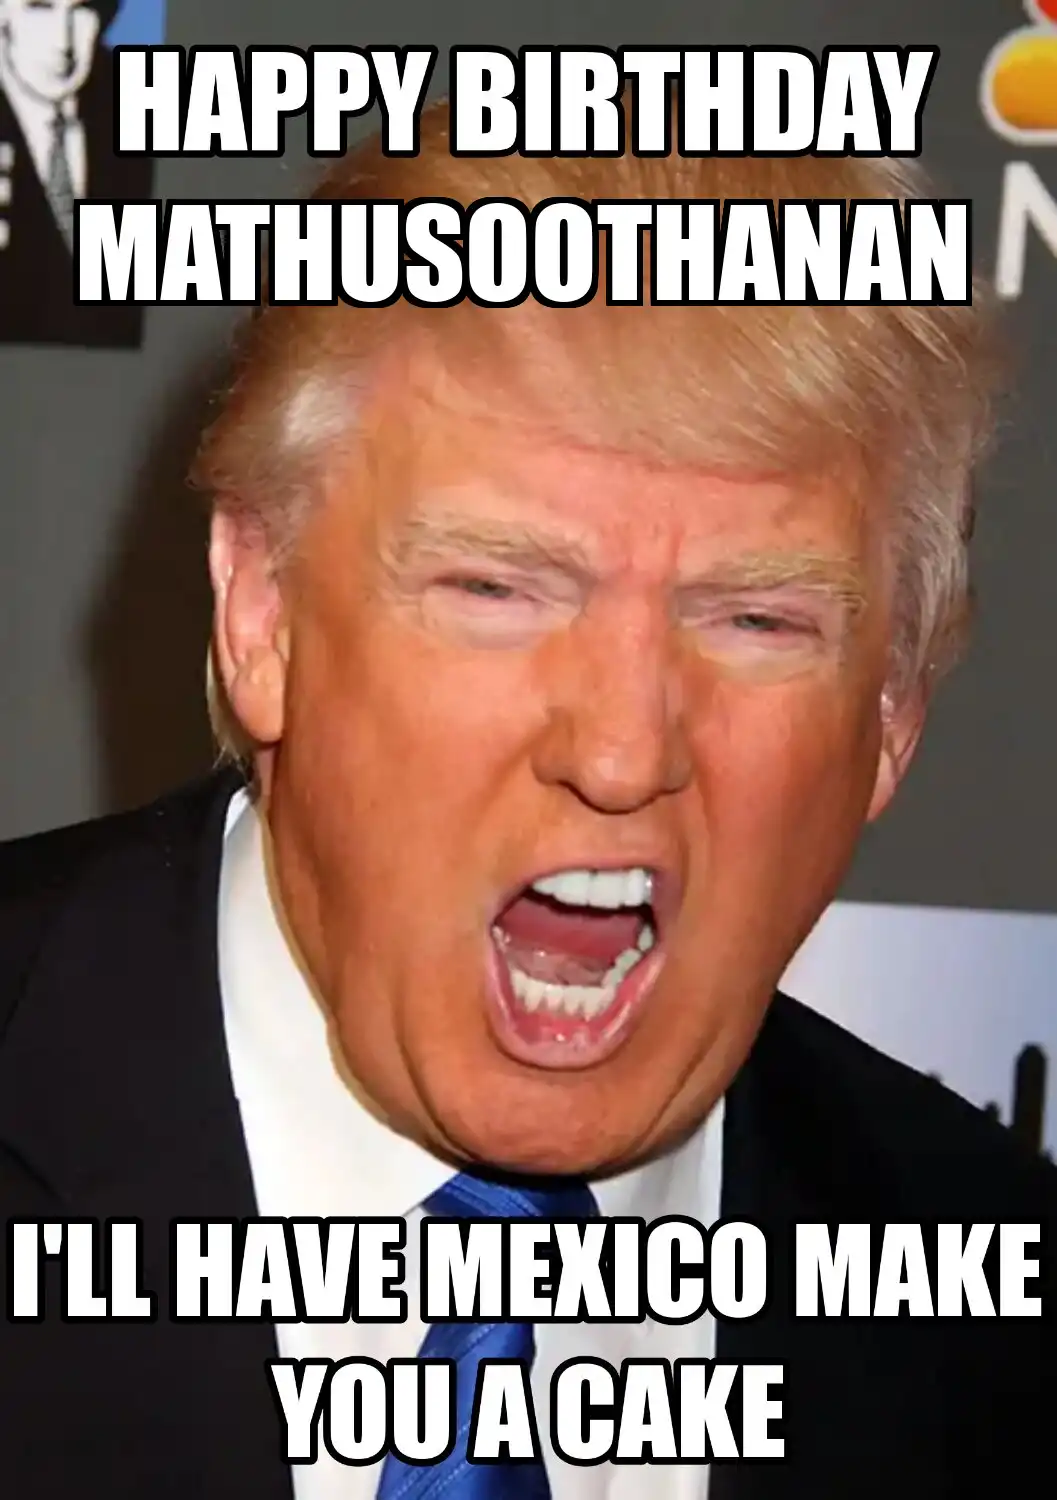 Happy Birthday Mathusoothanan Mexico Make You A Cake Meme